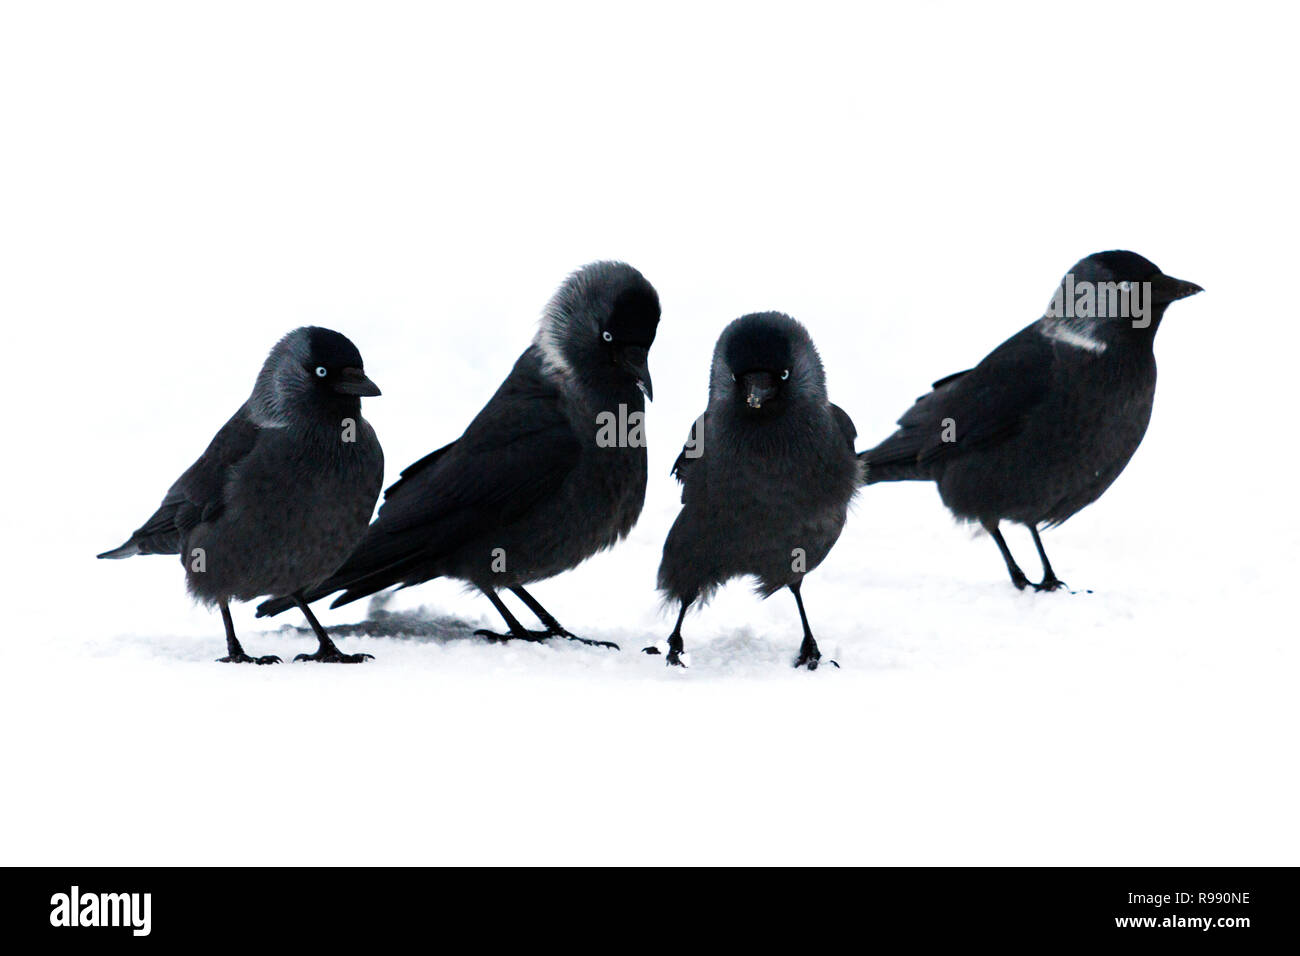 Schwarze Vögel (Western jackdaw) weißen Schnee gehen Stockfoto